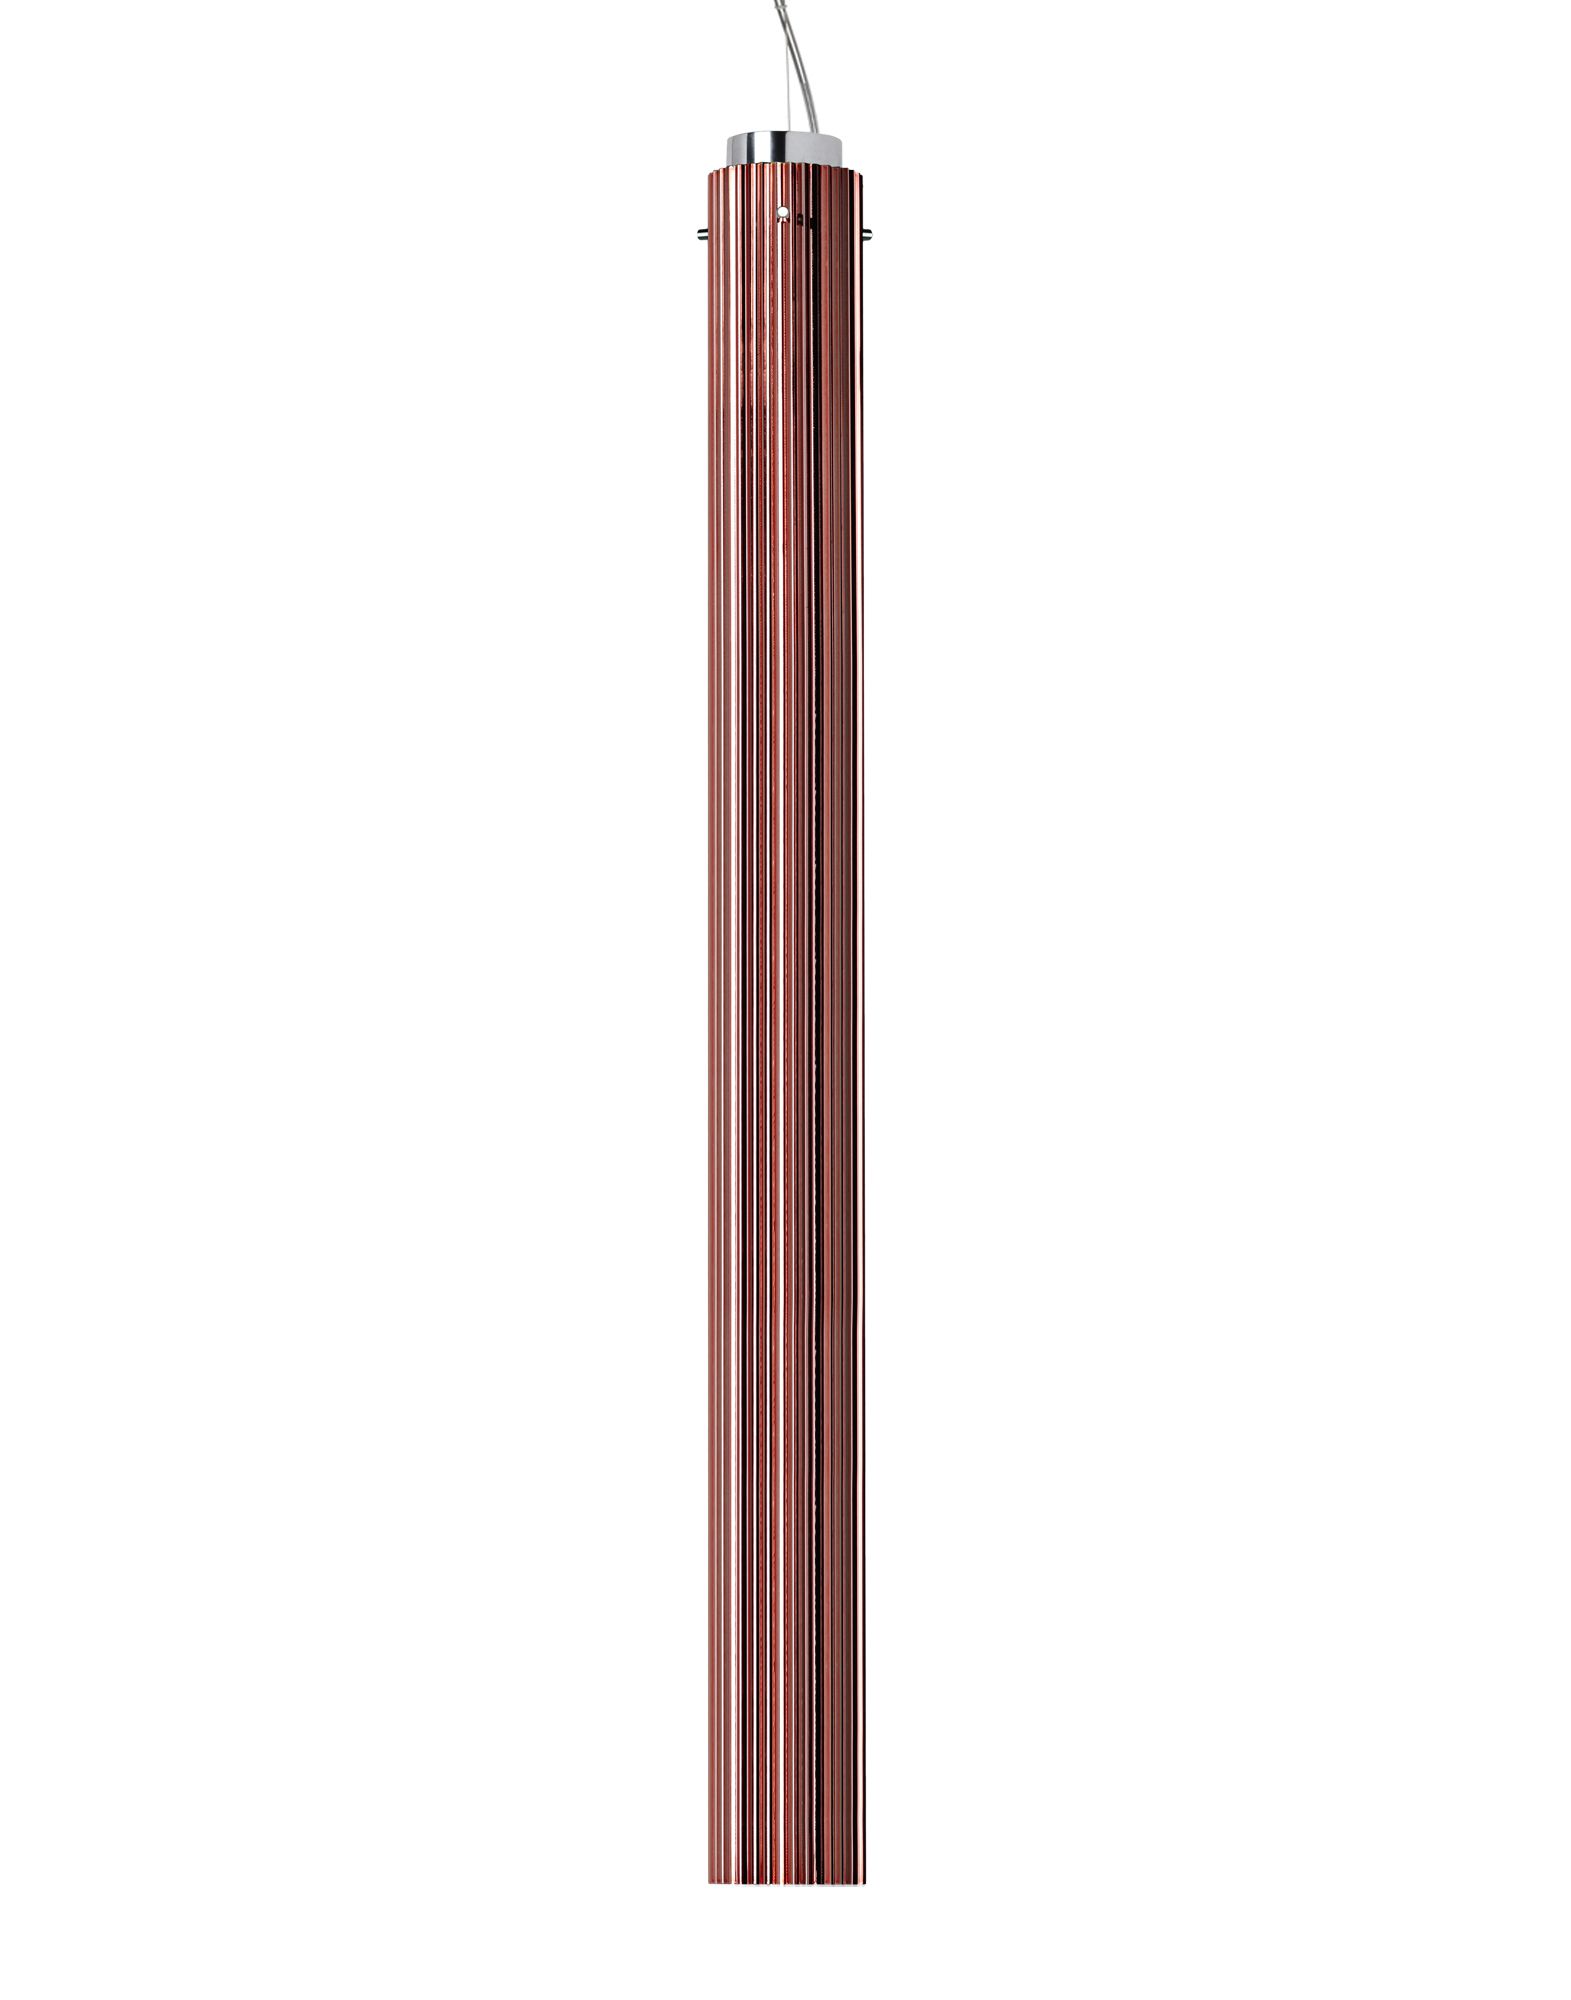 Suspensie Kartell by Laufen Rifly design Ludovica & Roberto Palomba LED 10W h90cm cupru metalizat